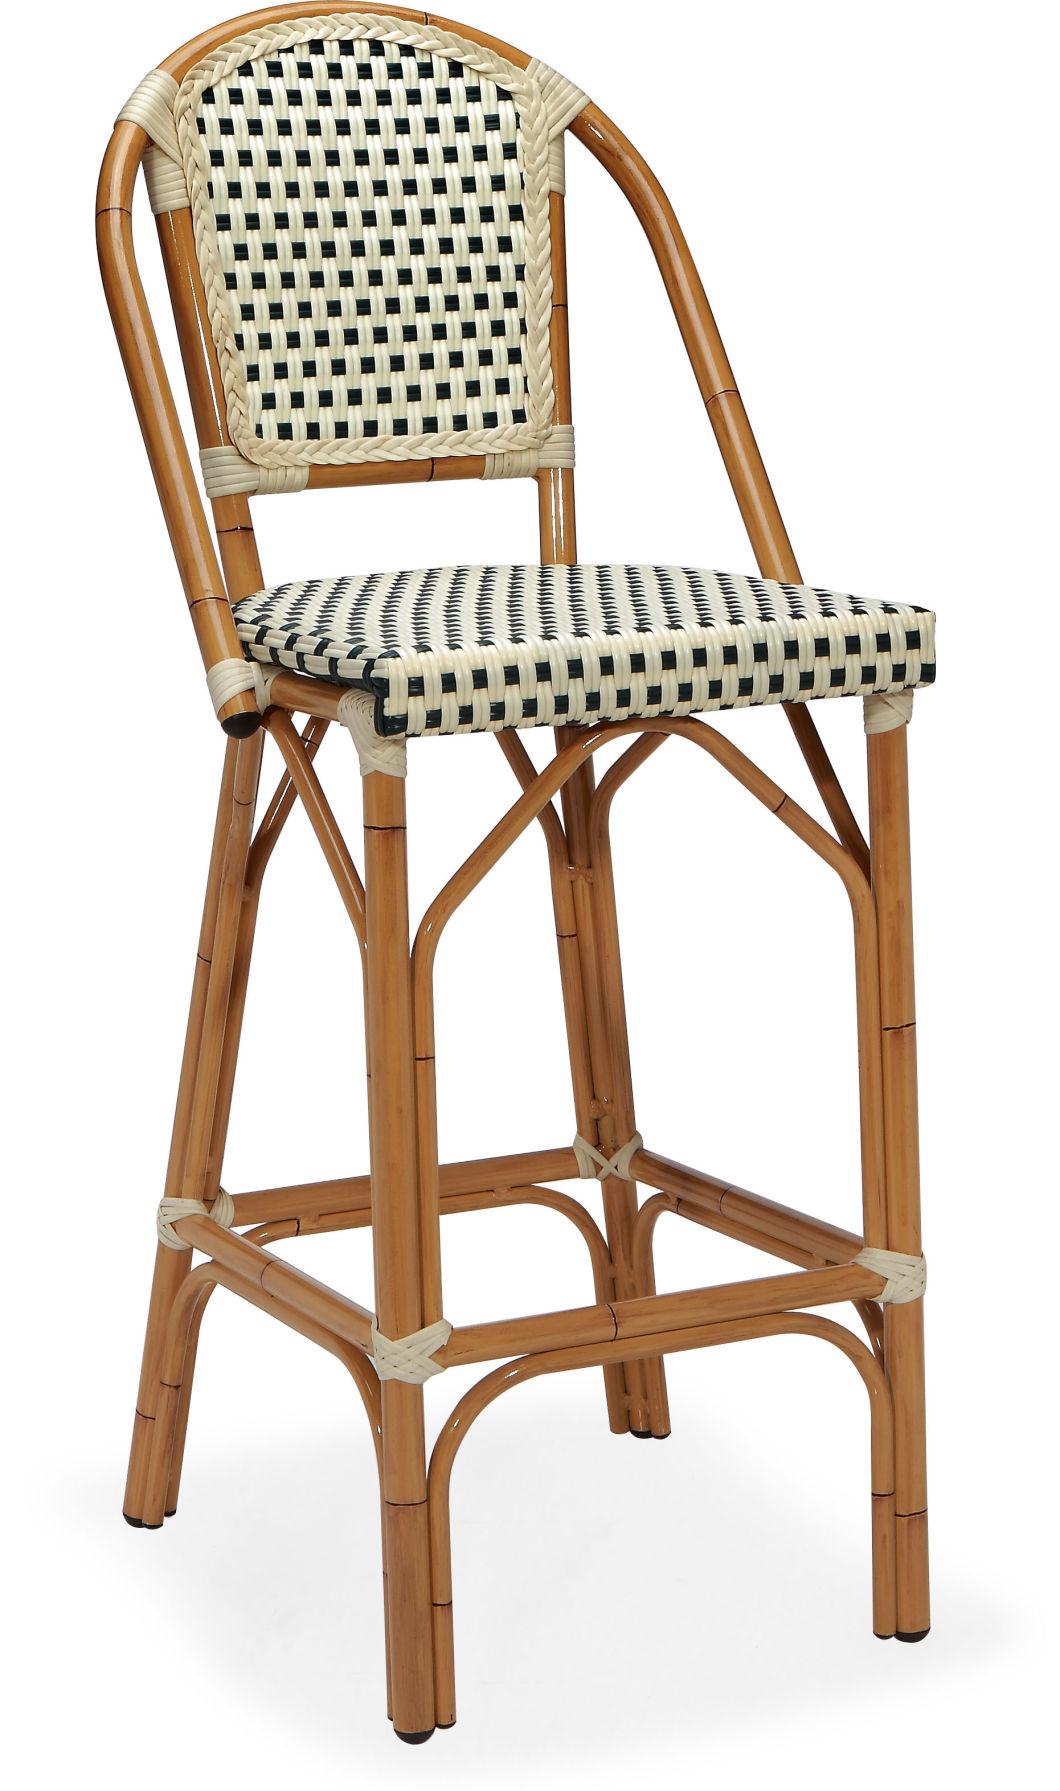 French Style Restaurant Garden Outdoor Rattan Dining Chair Bistro Chairs